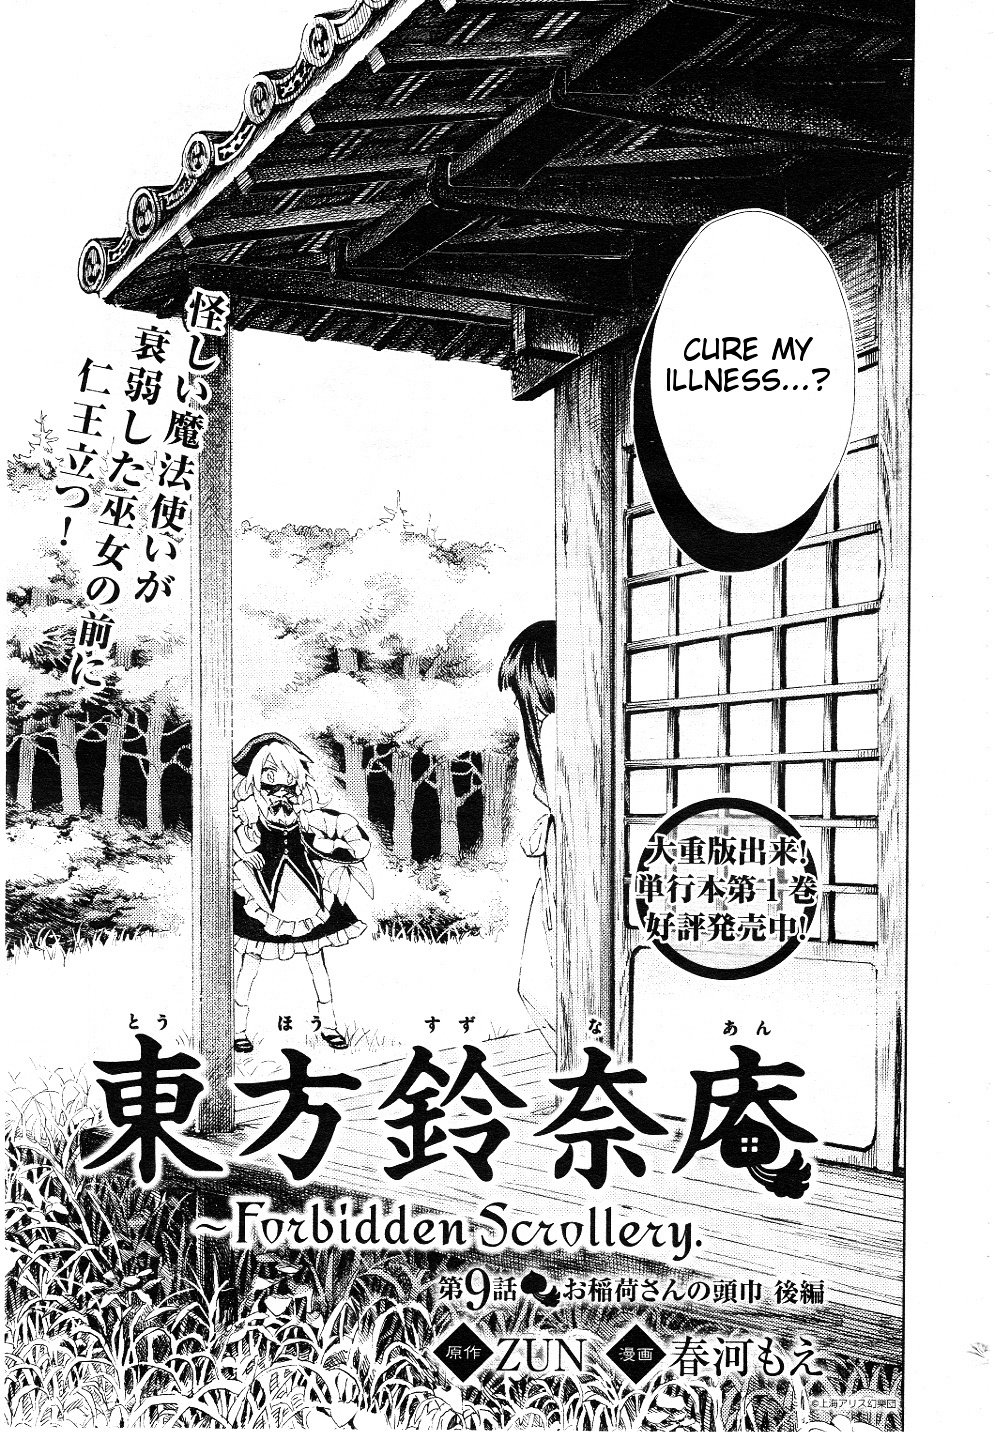 Touhou Suzunaan - Forbidden Scrollery. - Page 1